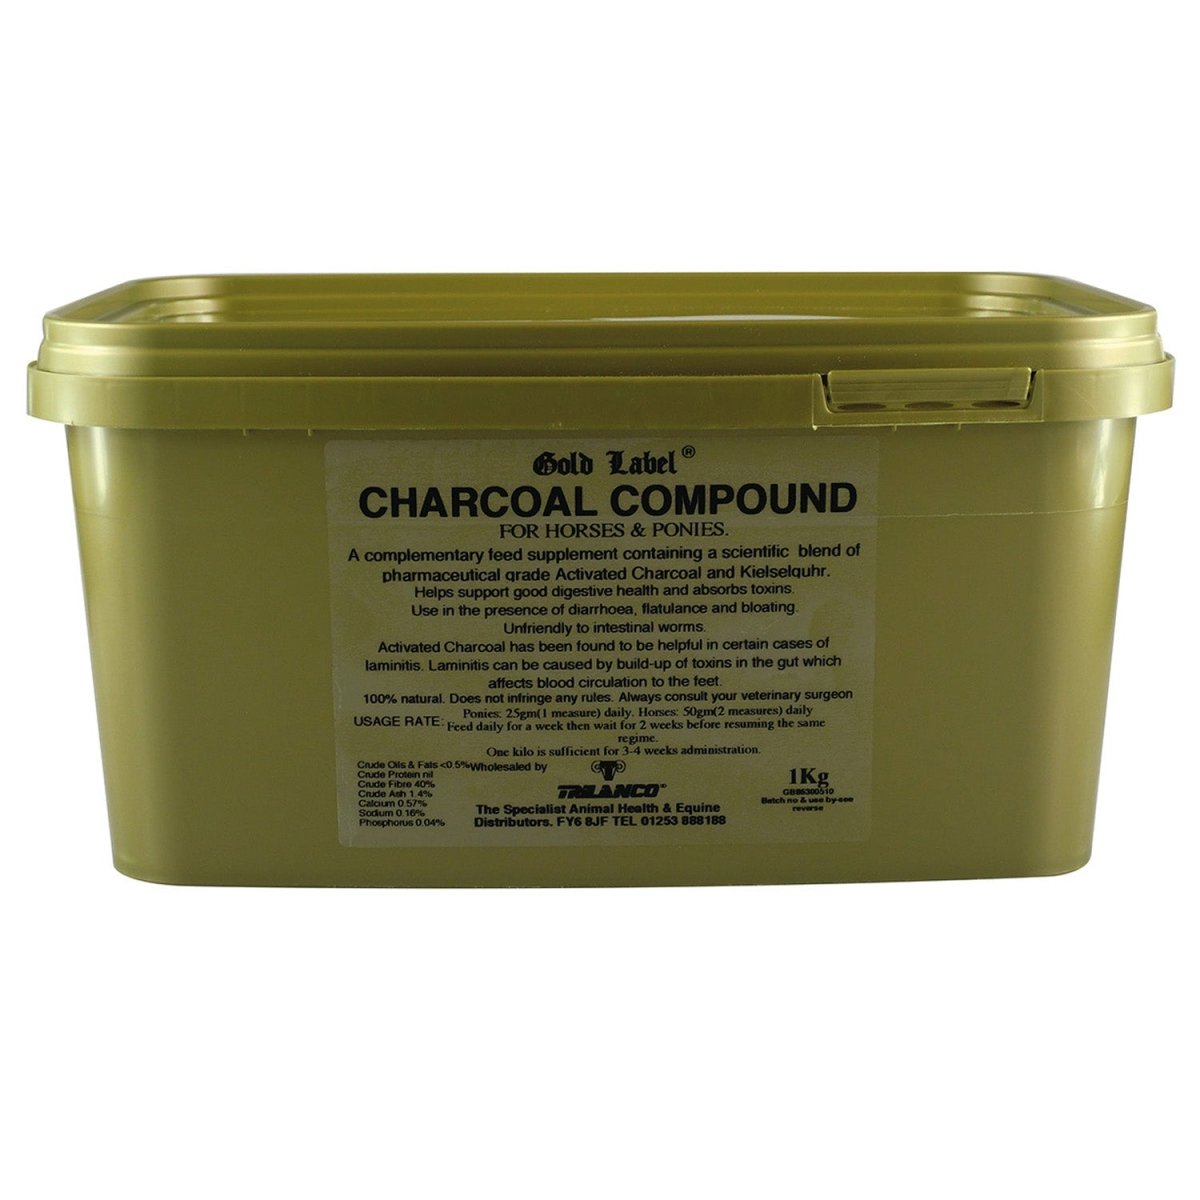 Gold Label Charcoal Compound - 1Kg -